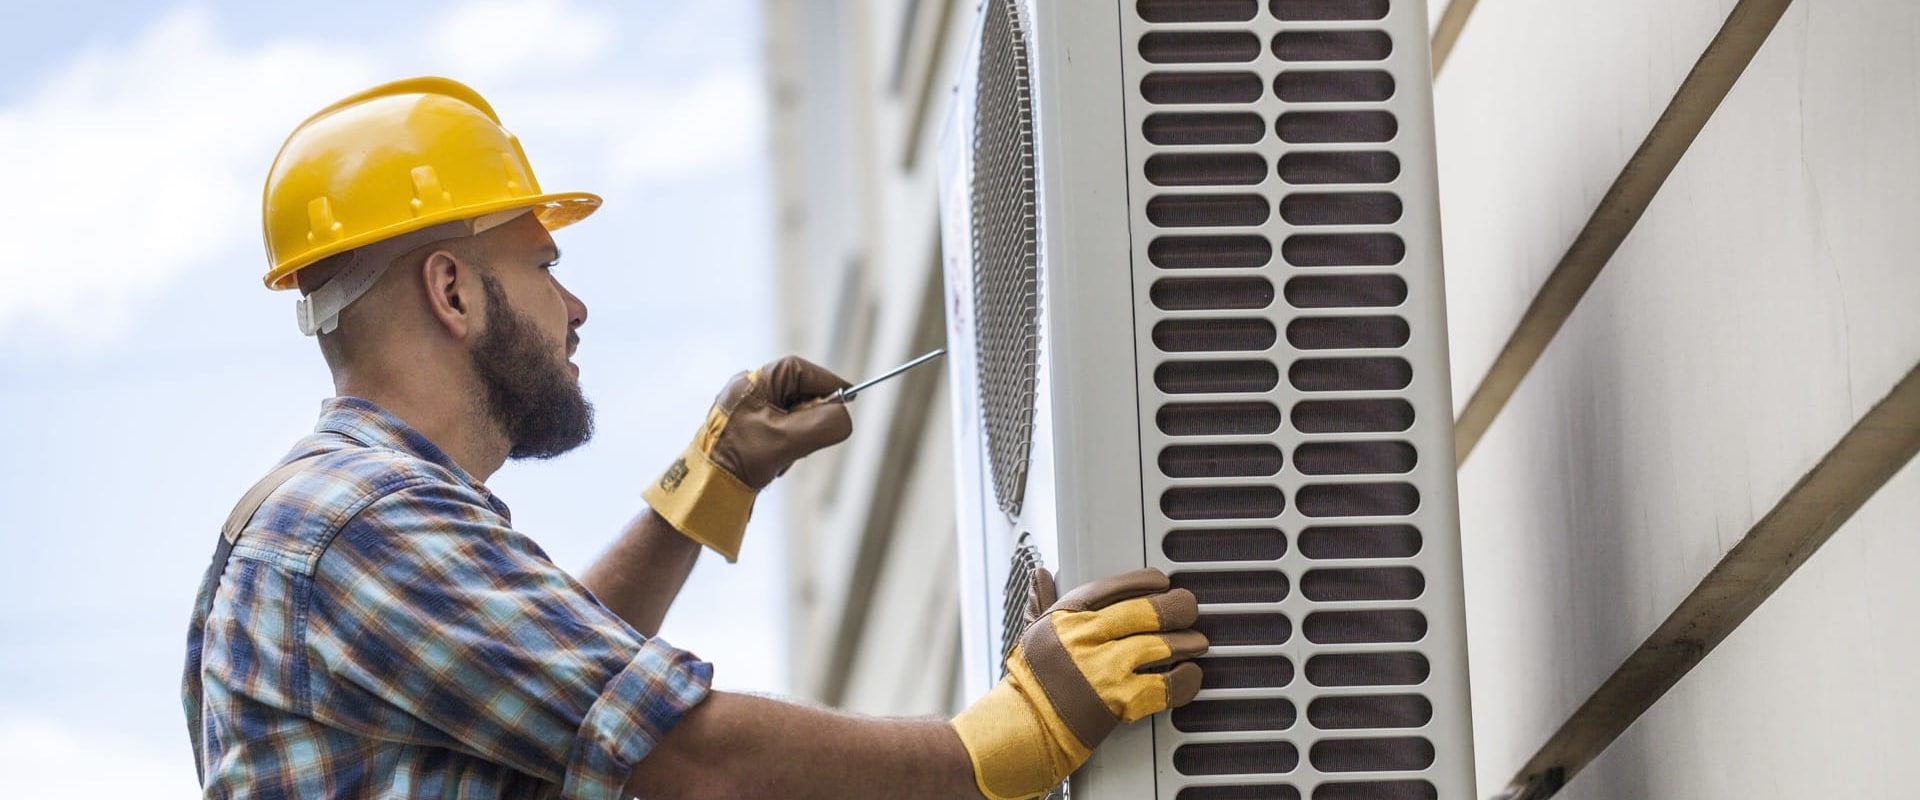 Does an HVAC Maintenance Company Provide Free Advice on Energy Efficiency Improvements?